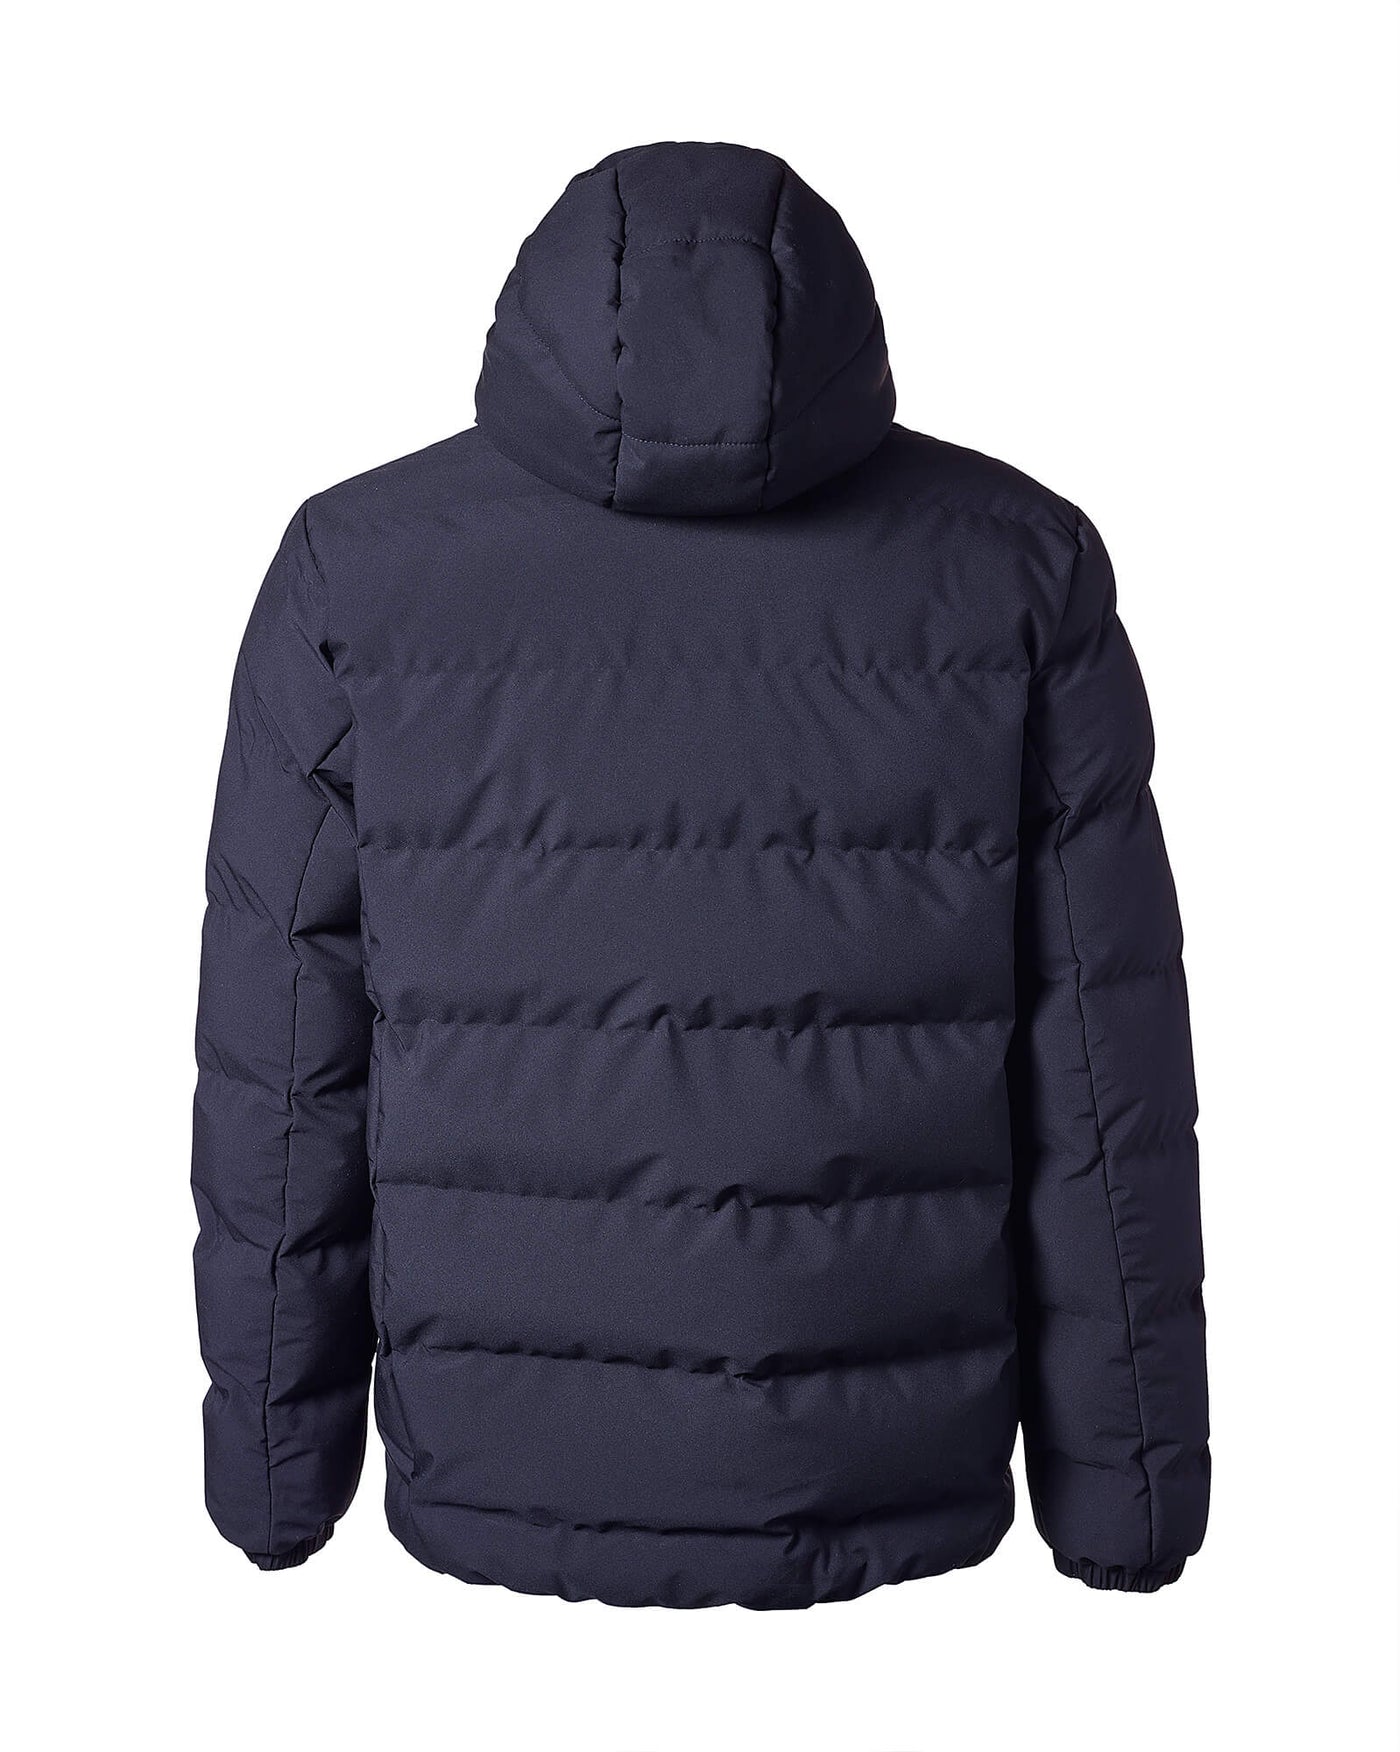 Pafi winter puffer jacket - Men’s